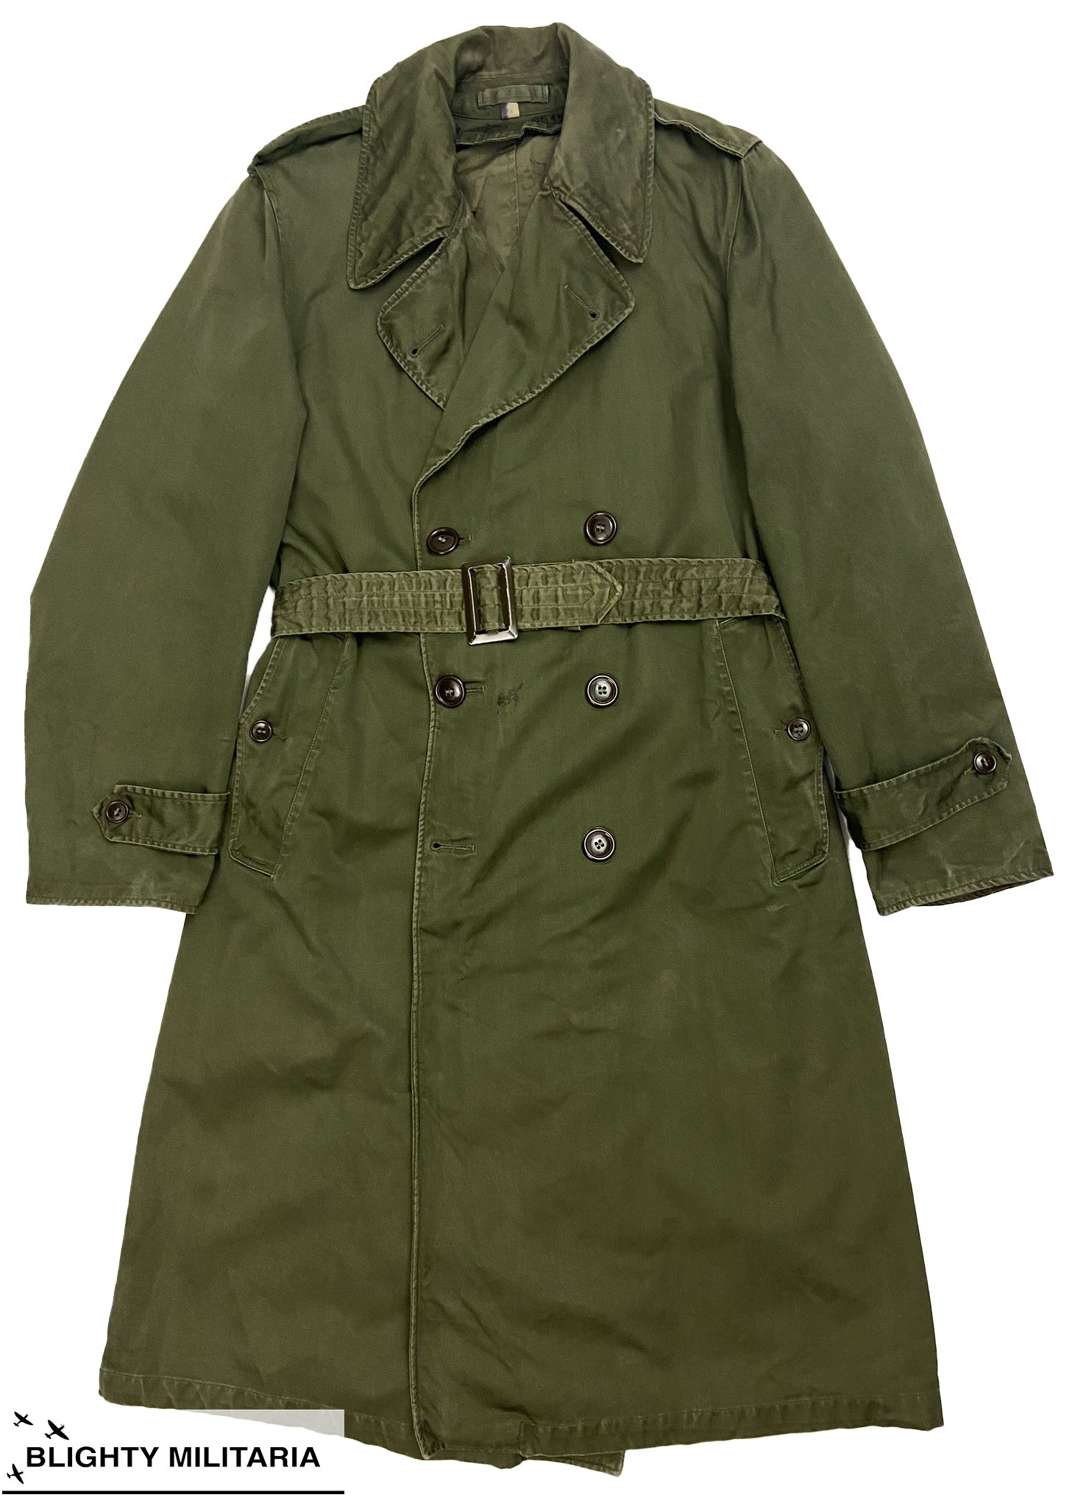 Original 1953 Dated US Army Raincoat - Size Reg Small